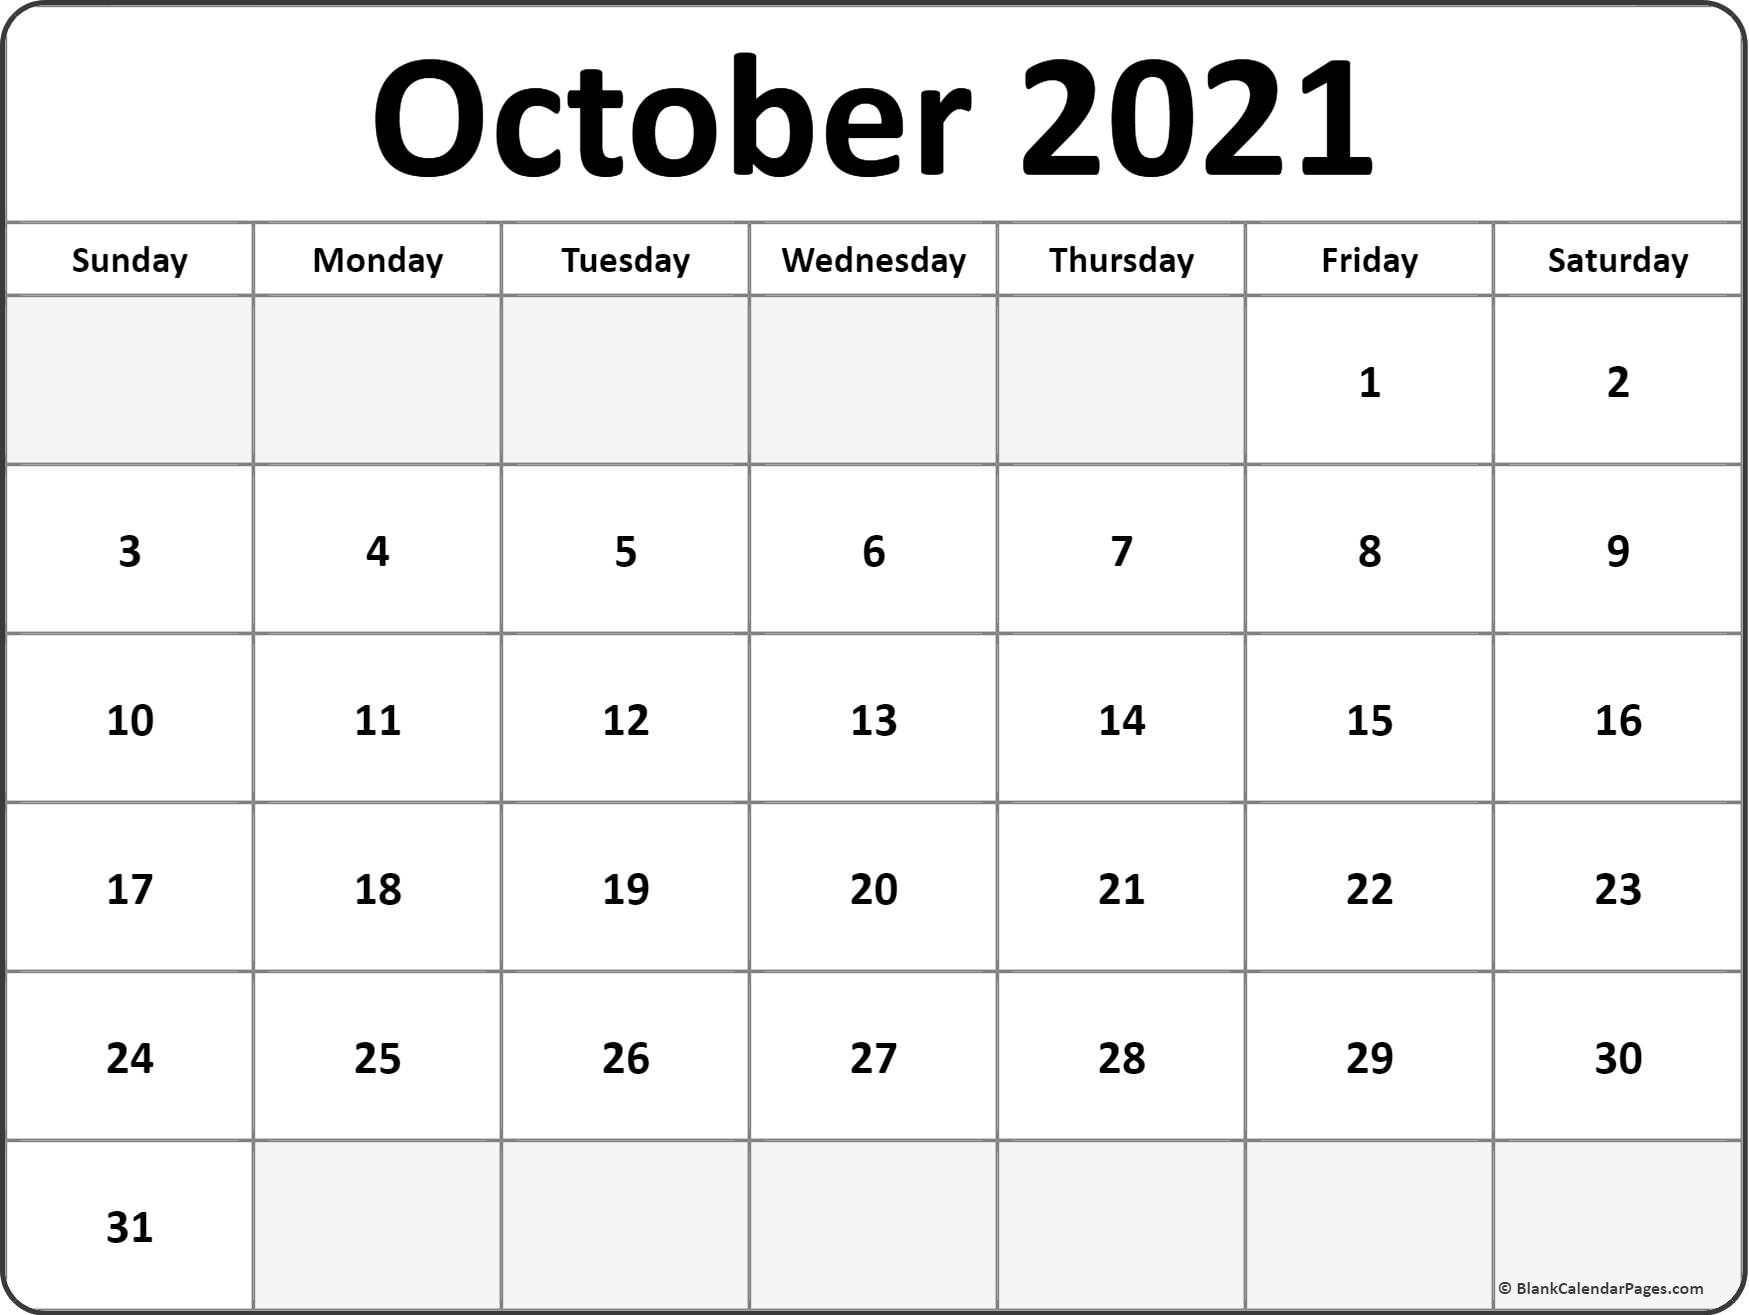 October 2021 calendar